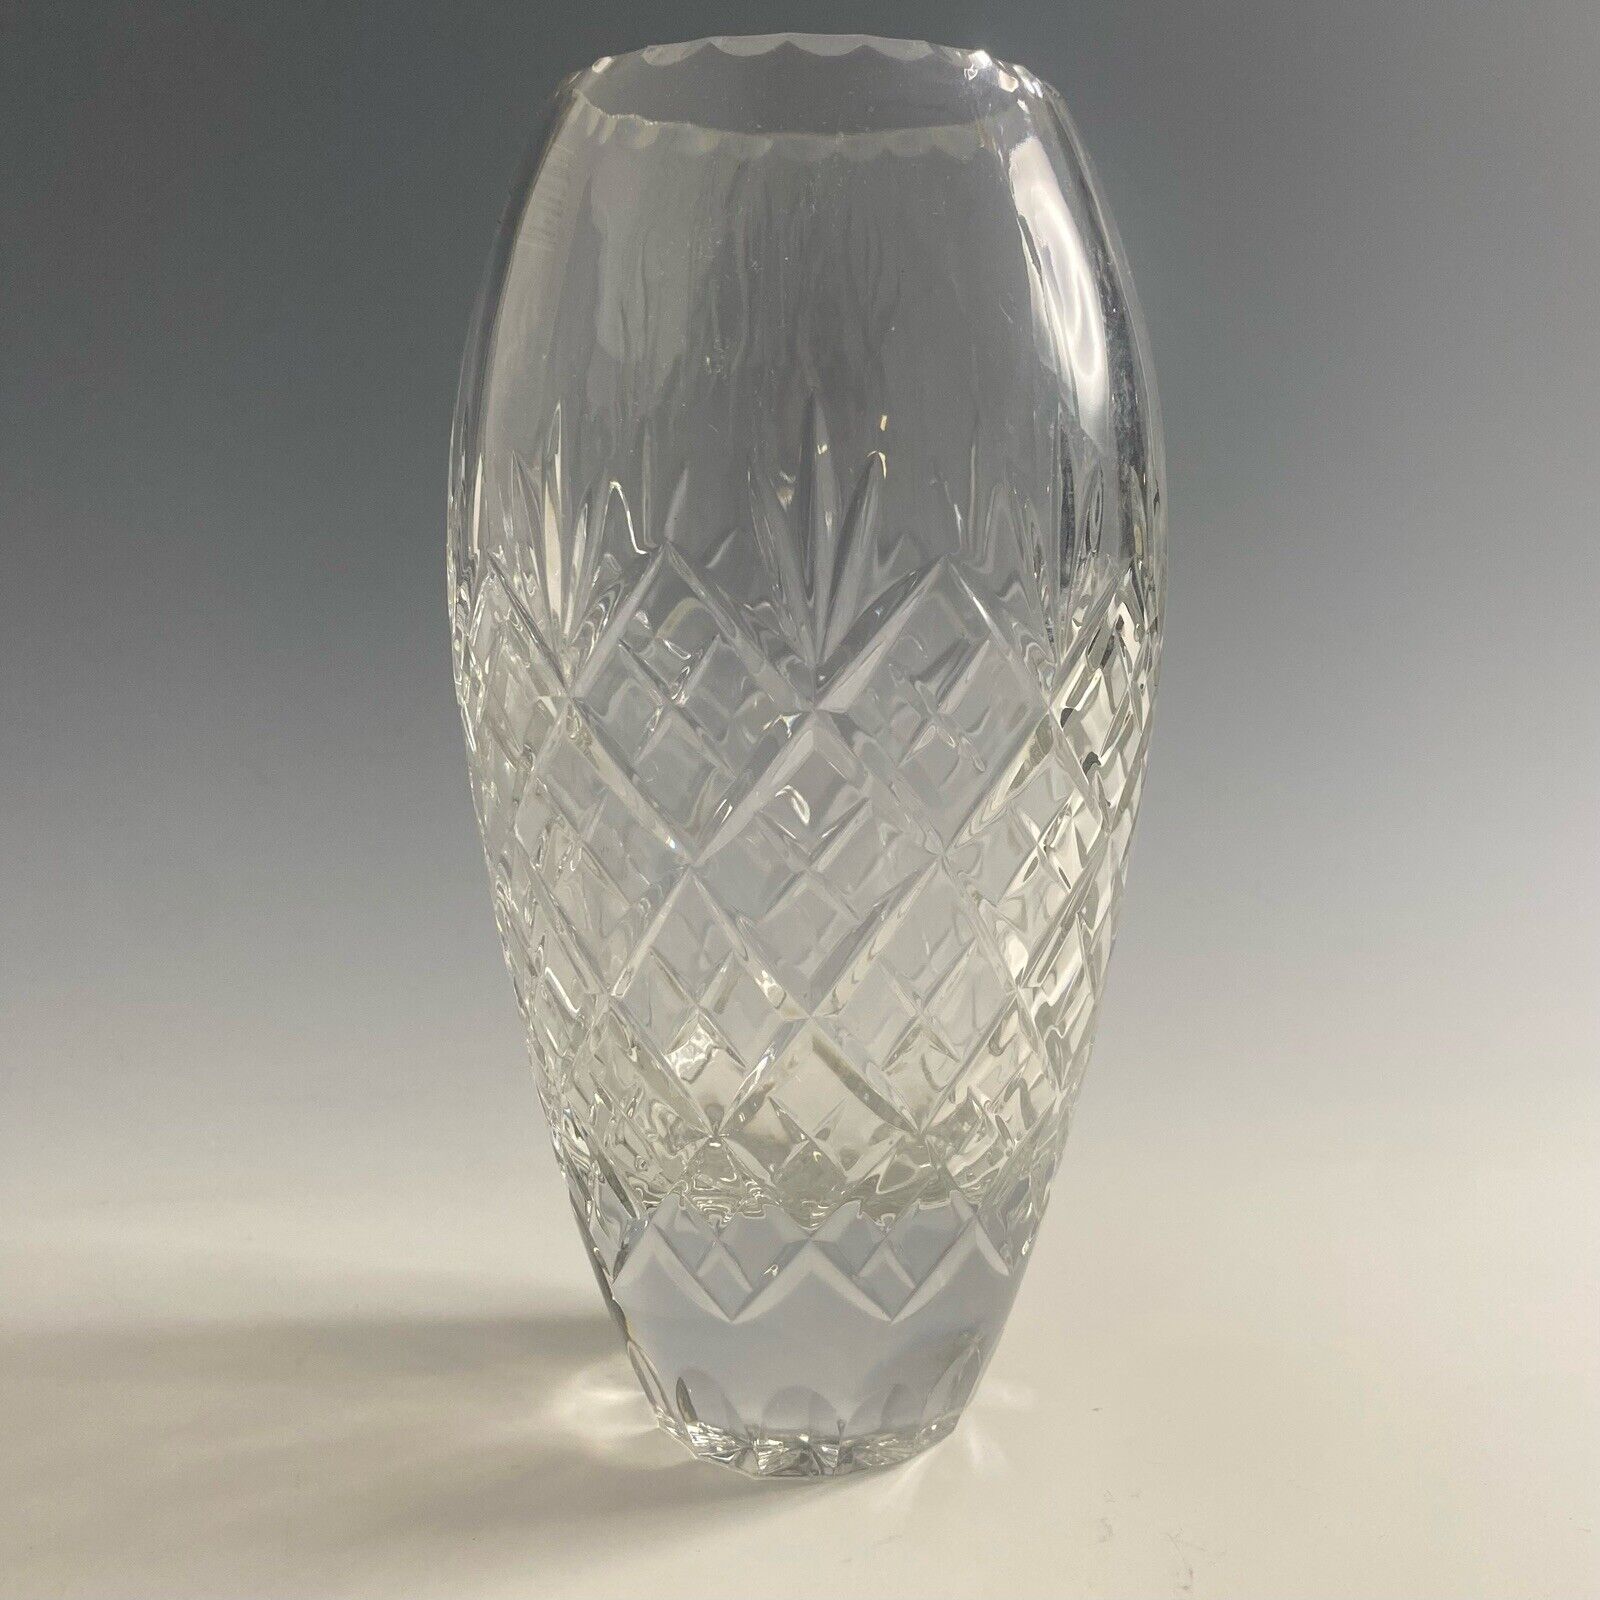 Vintage Illusions Crystal Vase by Samobor 24% Full Lead Handcut Handblown 9